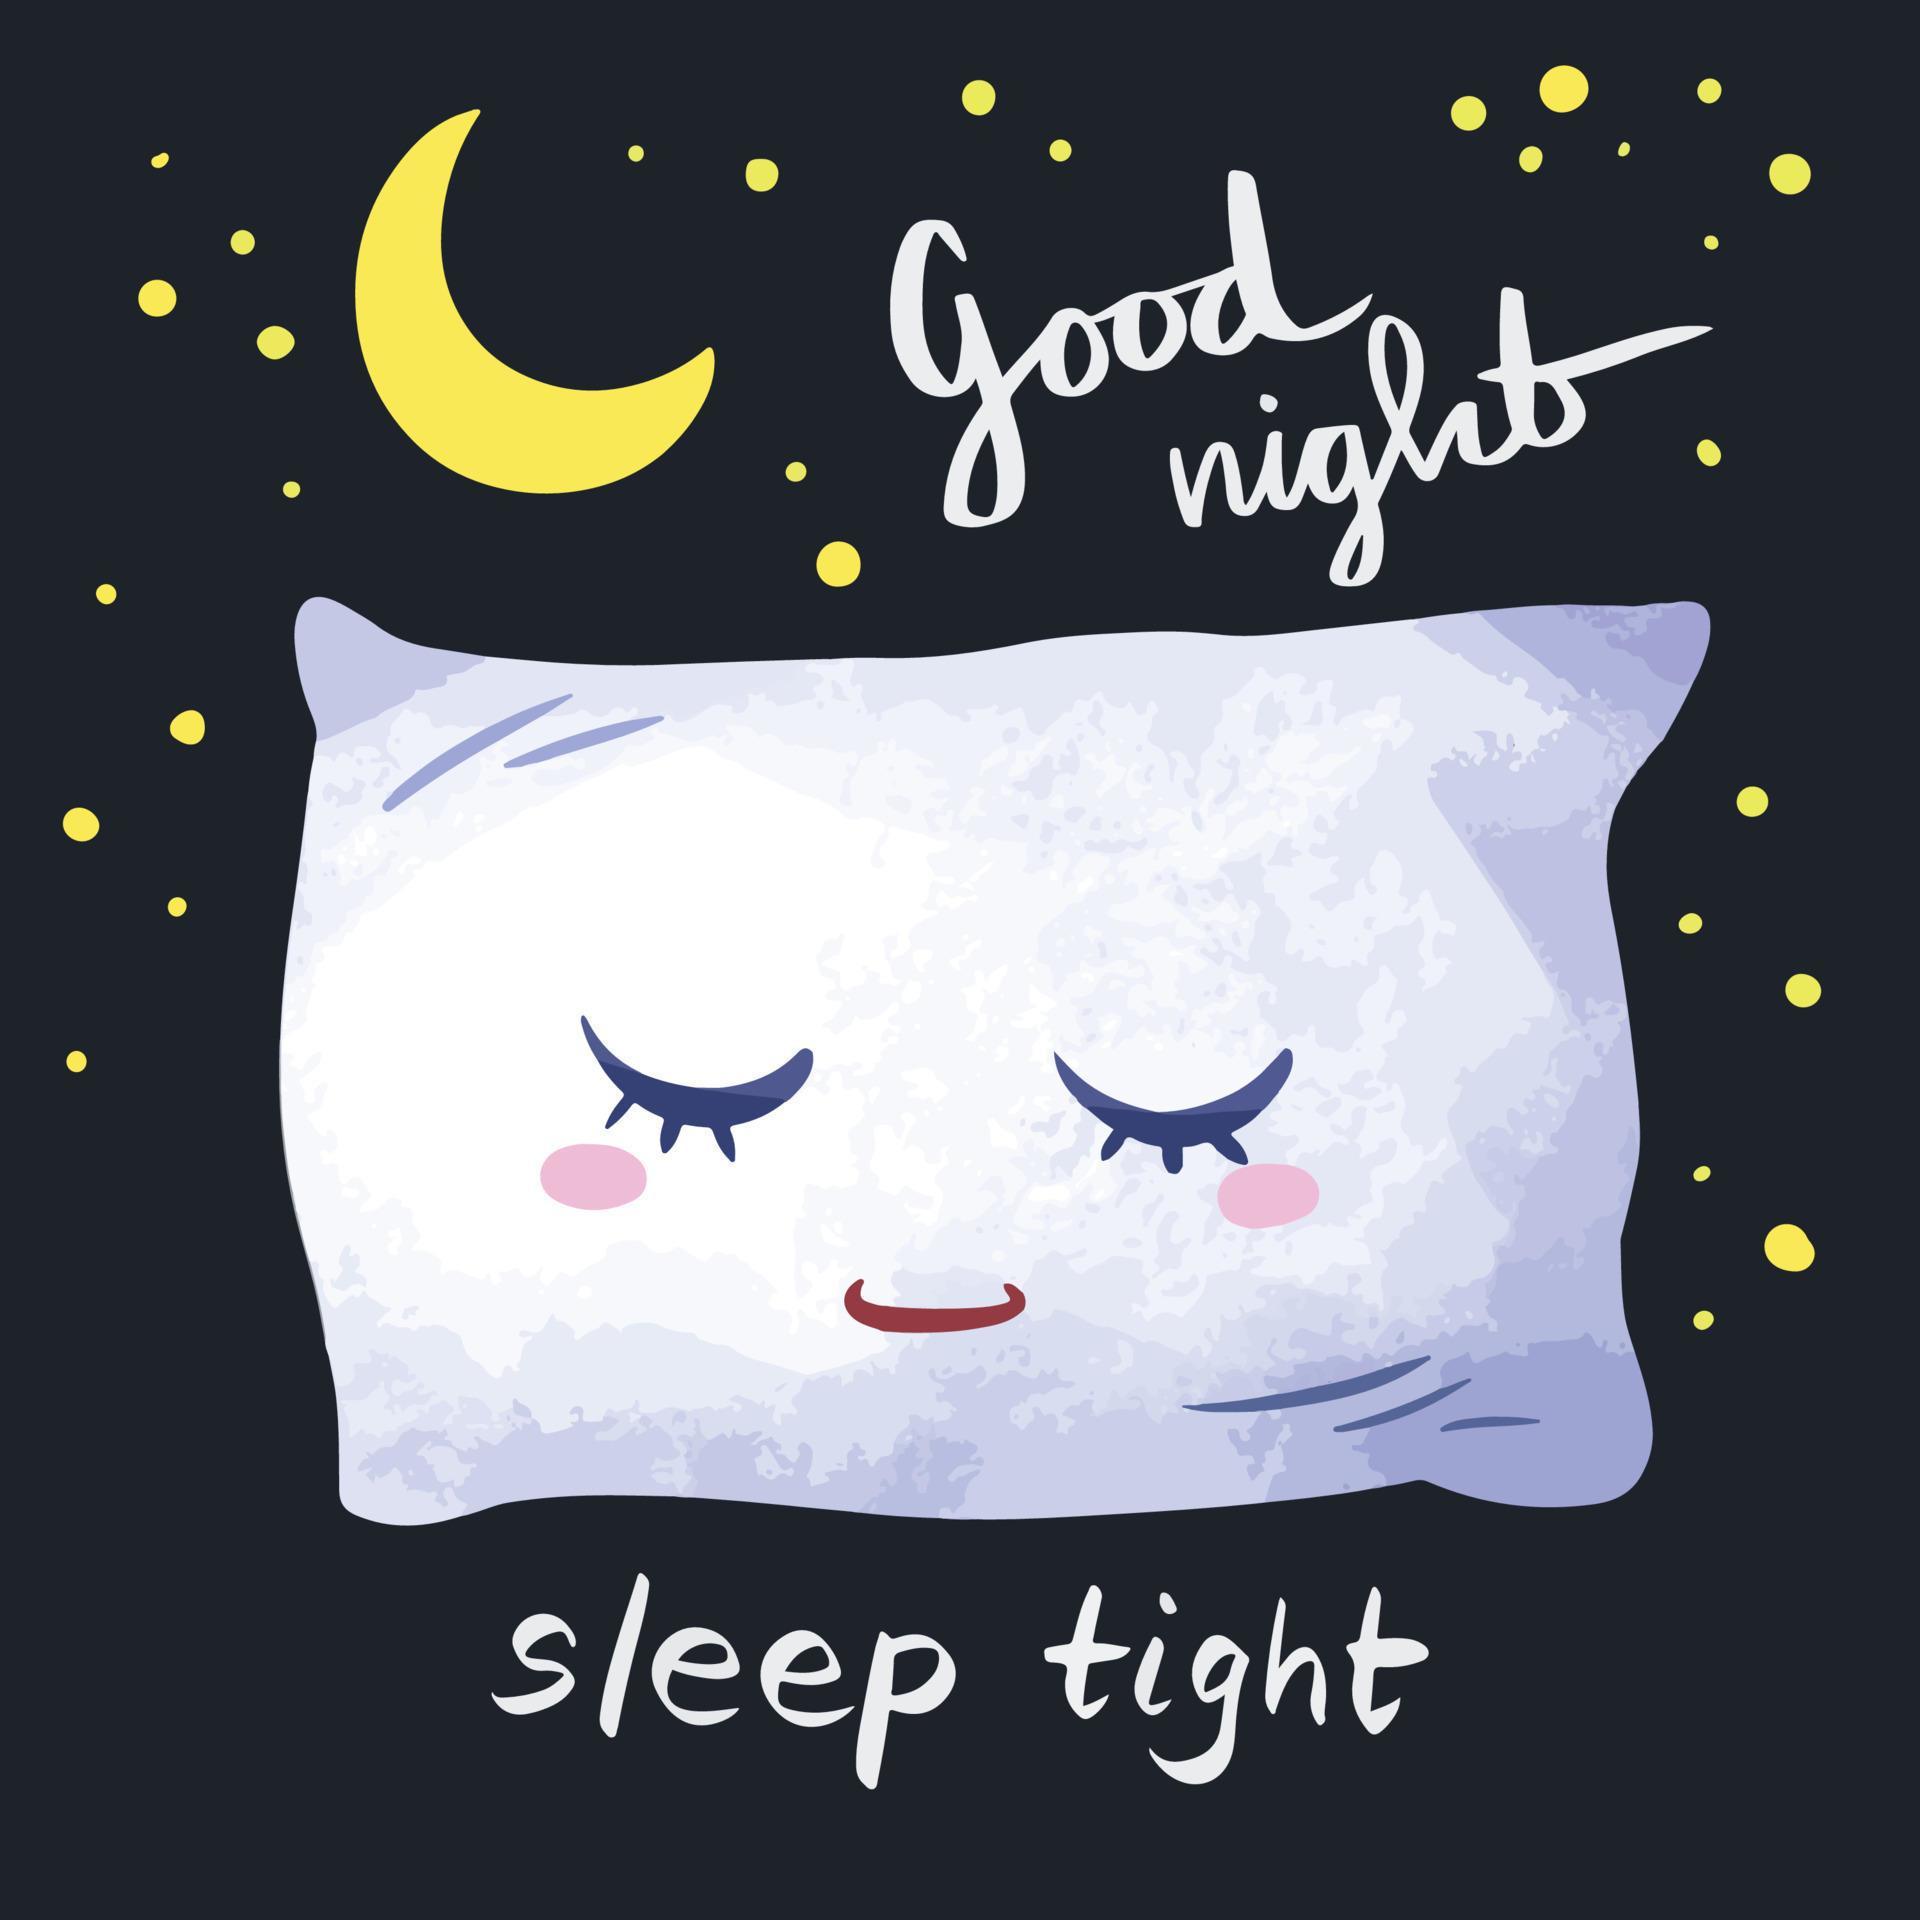 Cute sleeping pillow character. Good night sleep tight themed vector ...